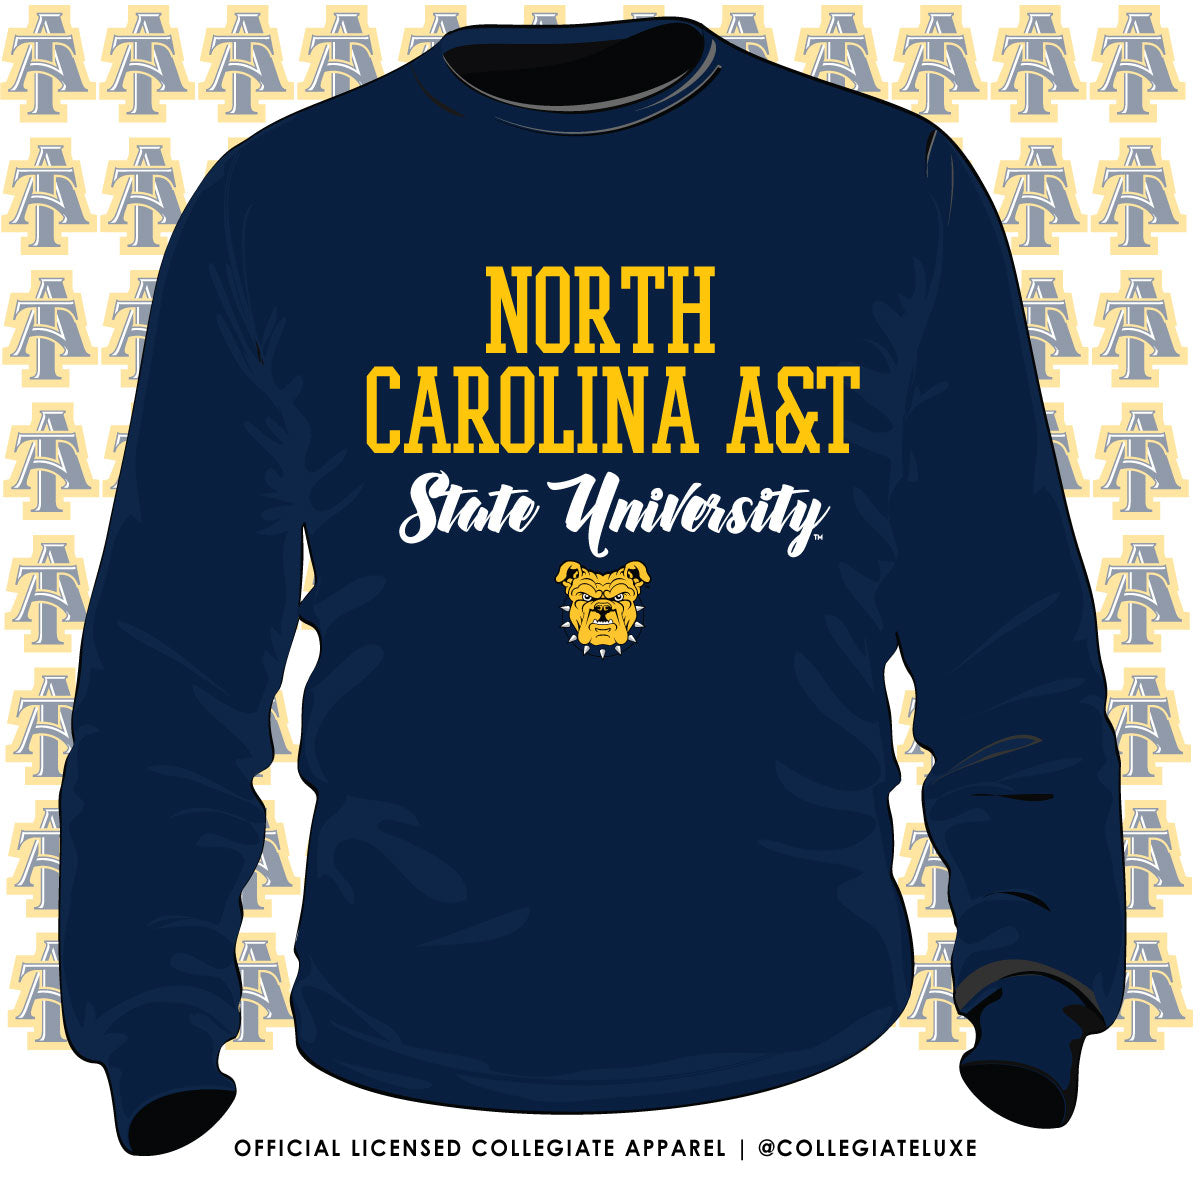 NC A&T AGGIE | 2020 Univ. Navy Unisex Sweatshirt (DK)